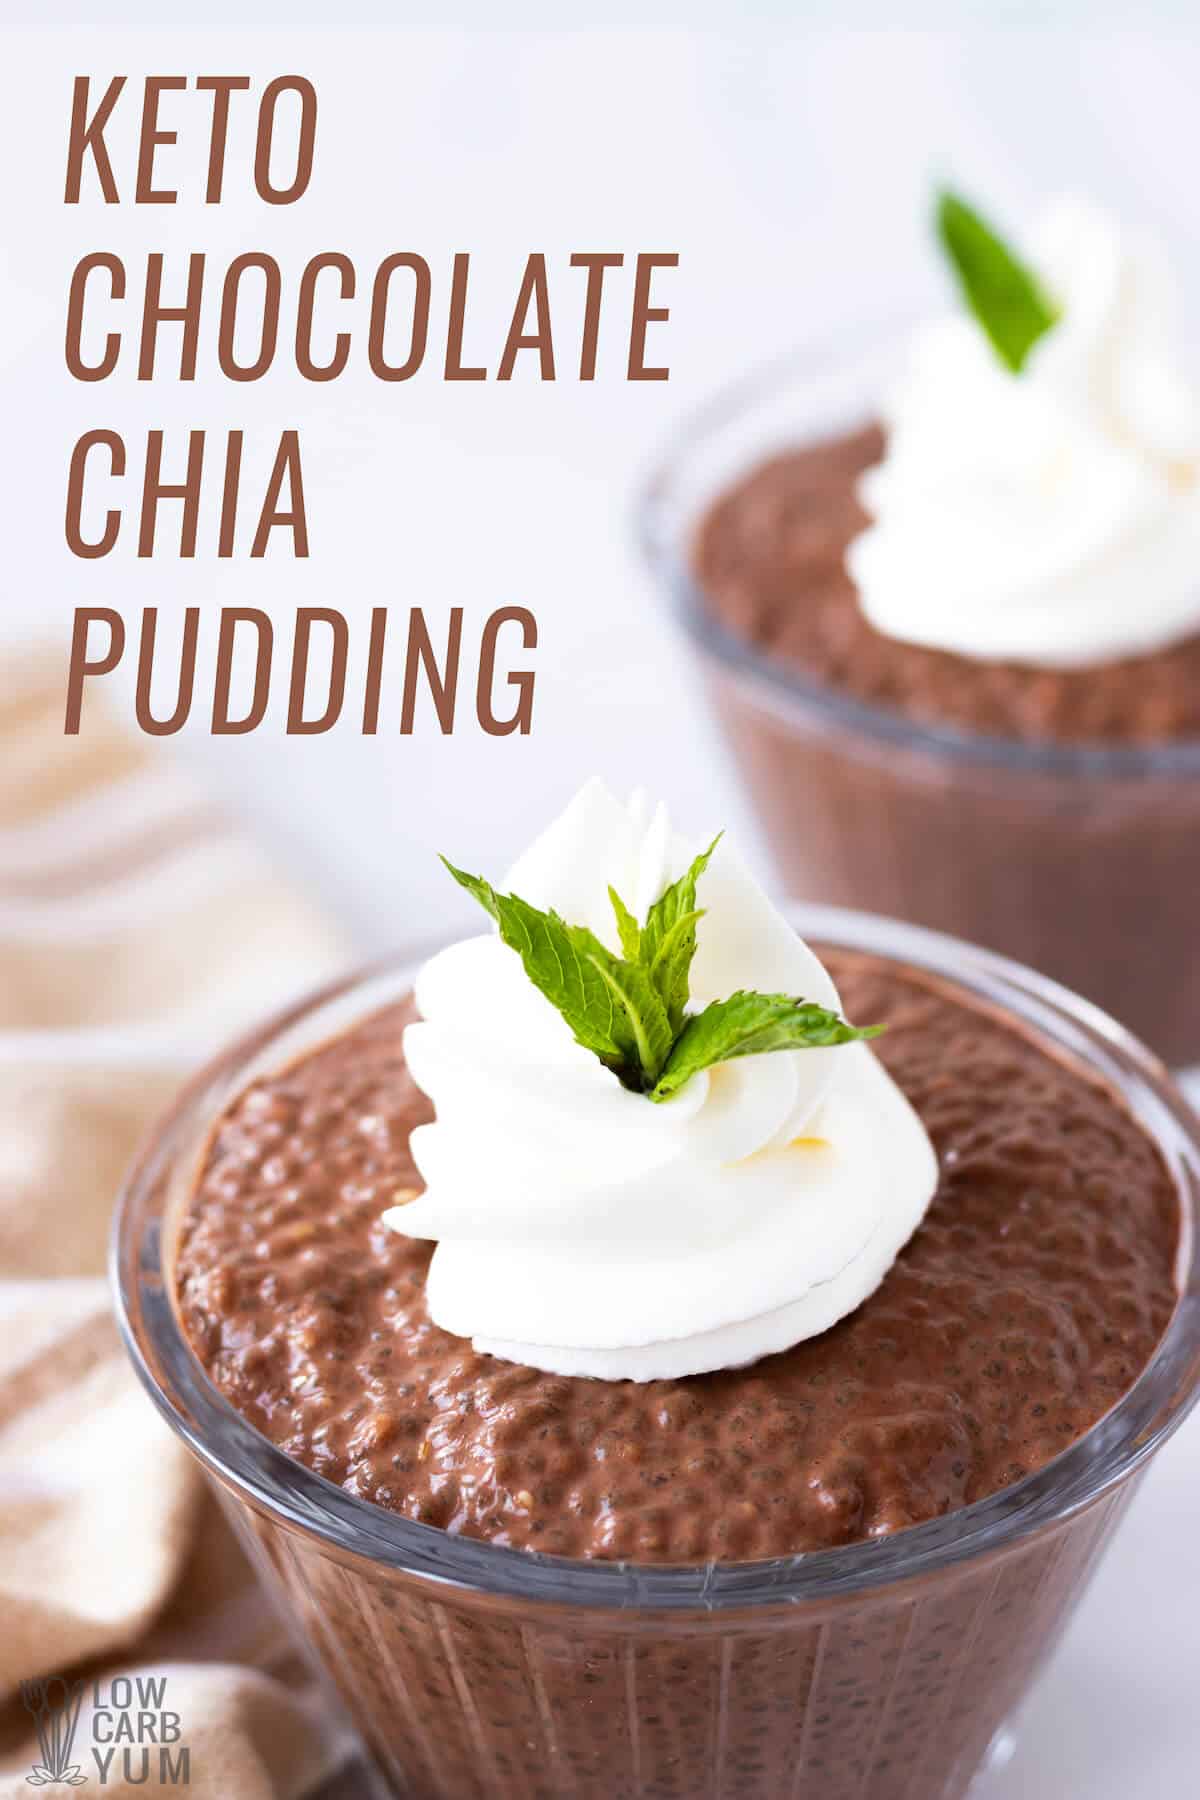 chocolate chia pudding